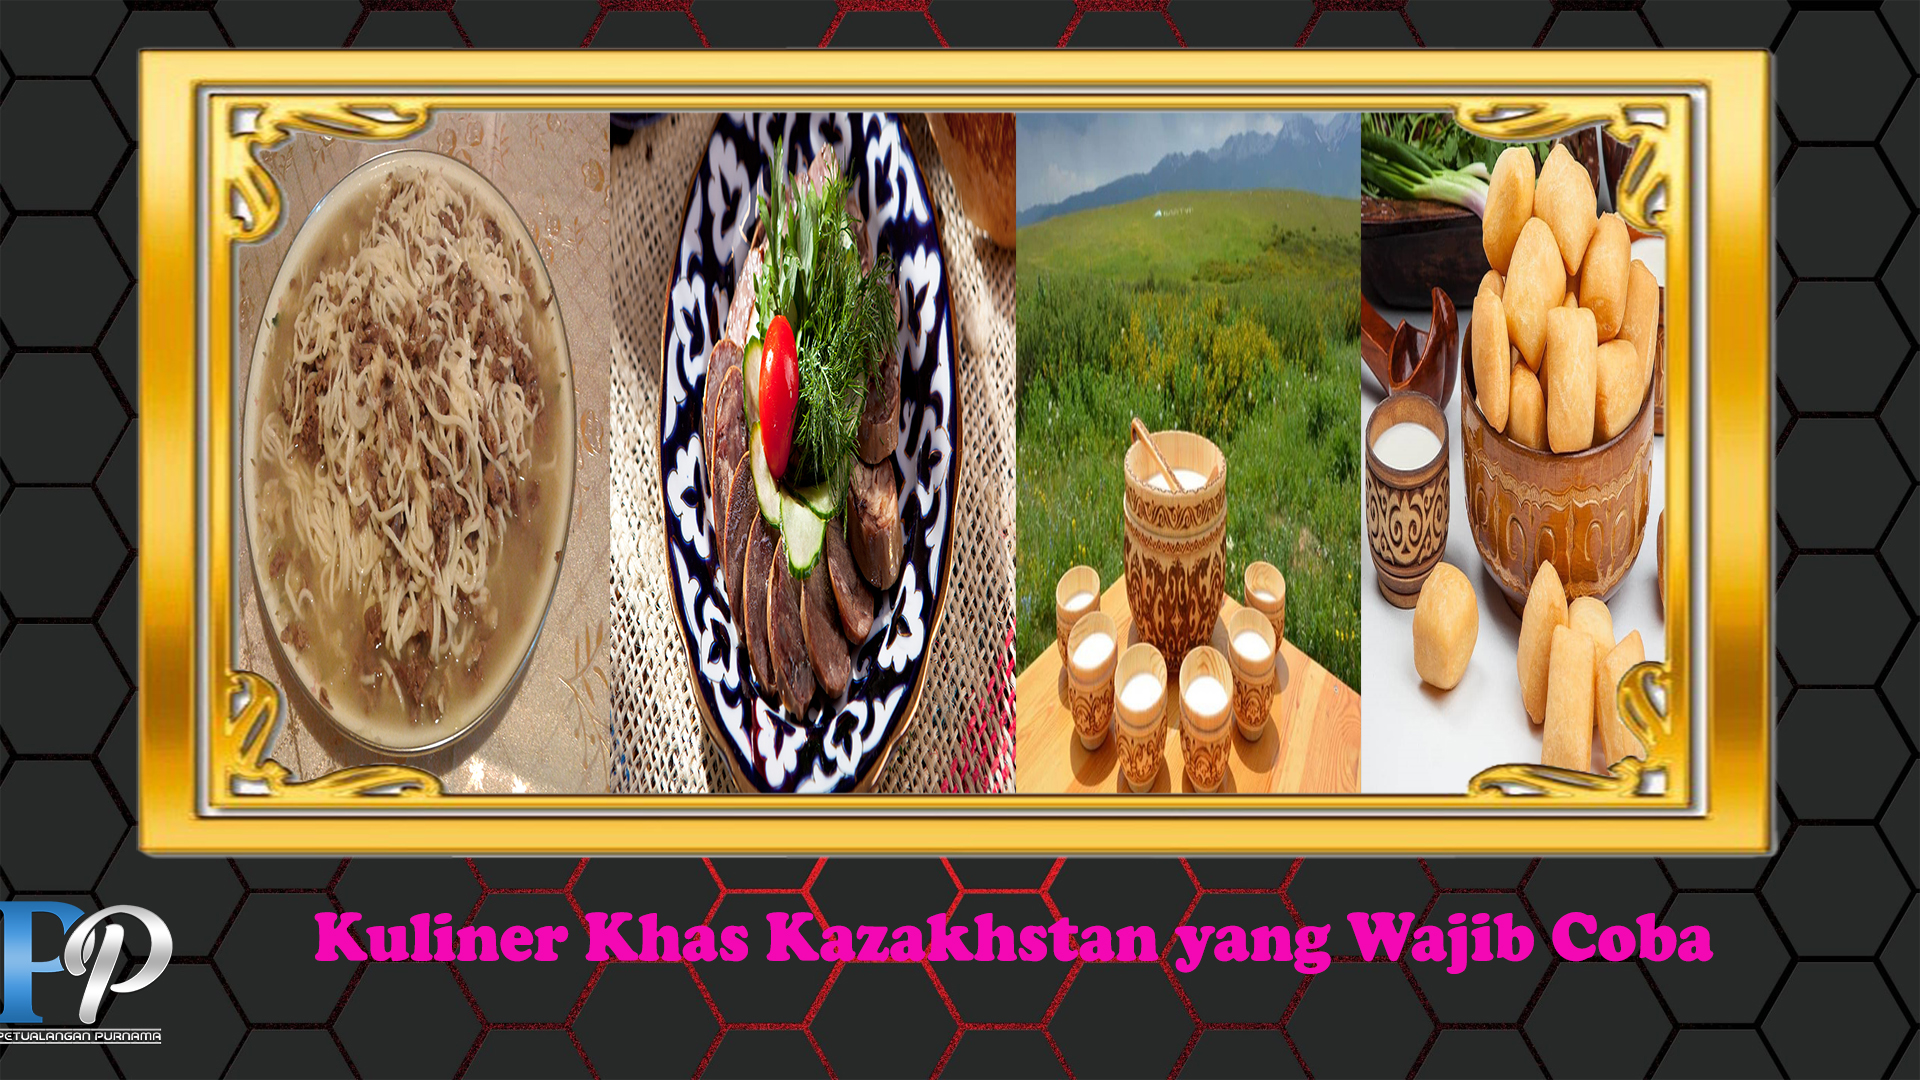 Kuliner Khas Kazakhstan yang Wajib Coba